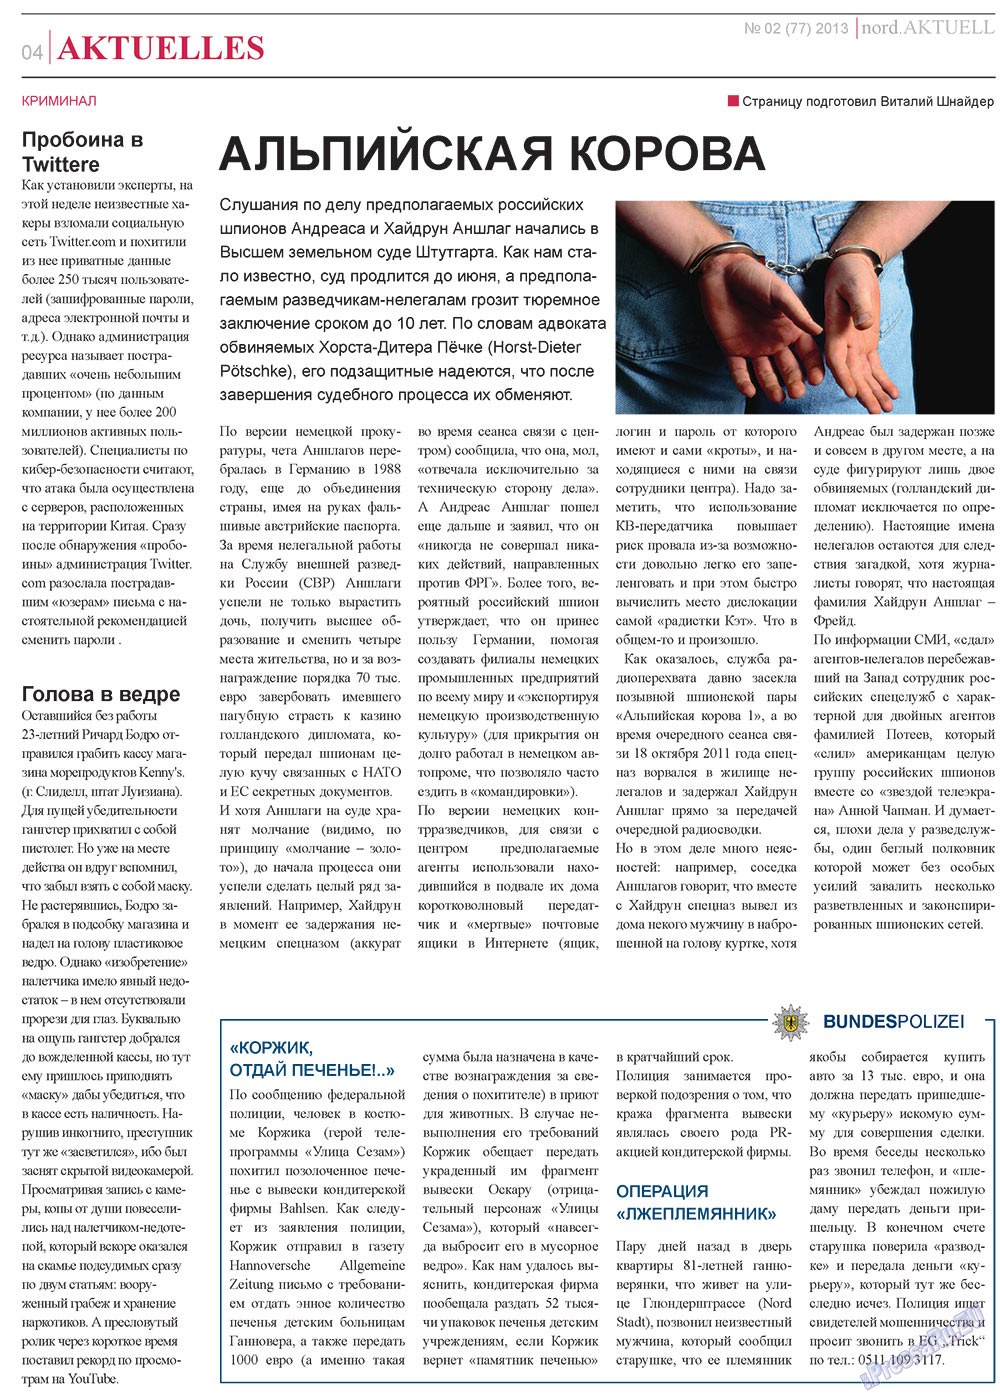 nord.Aktuell, газета. 2013 №2 стр.4